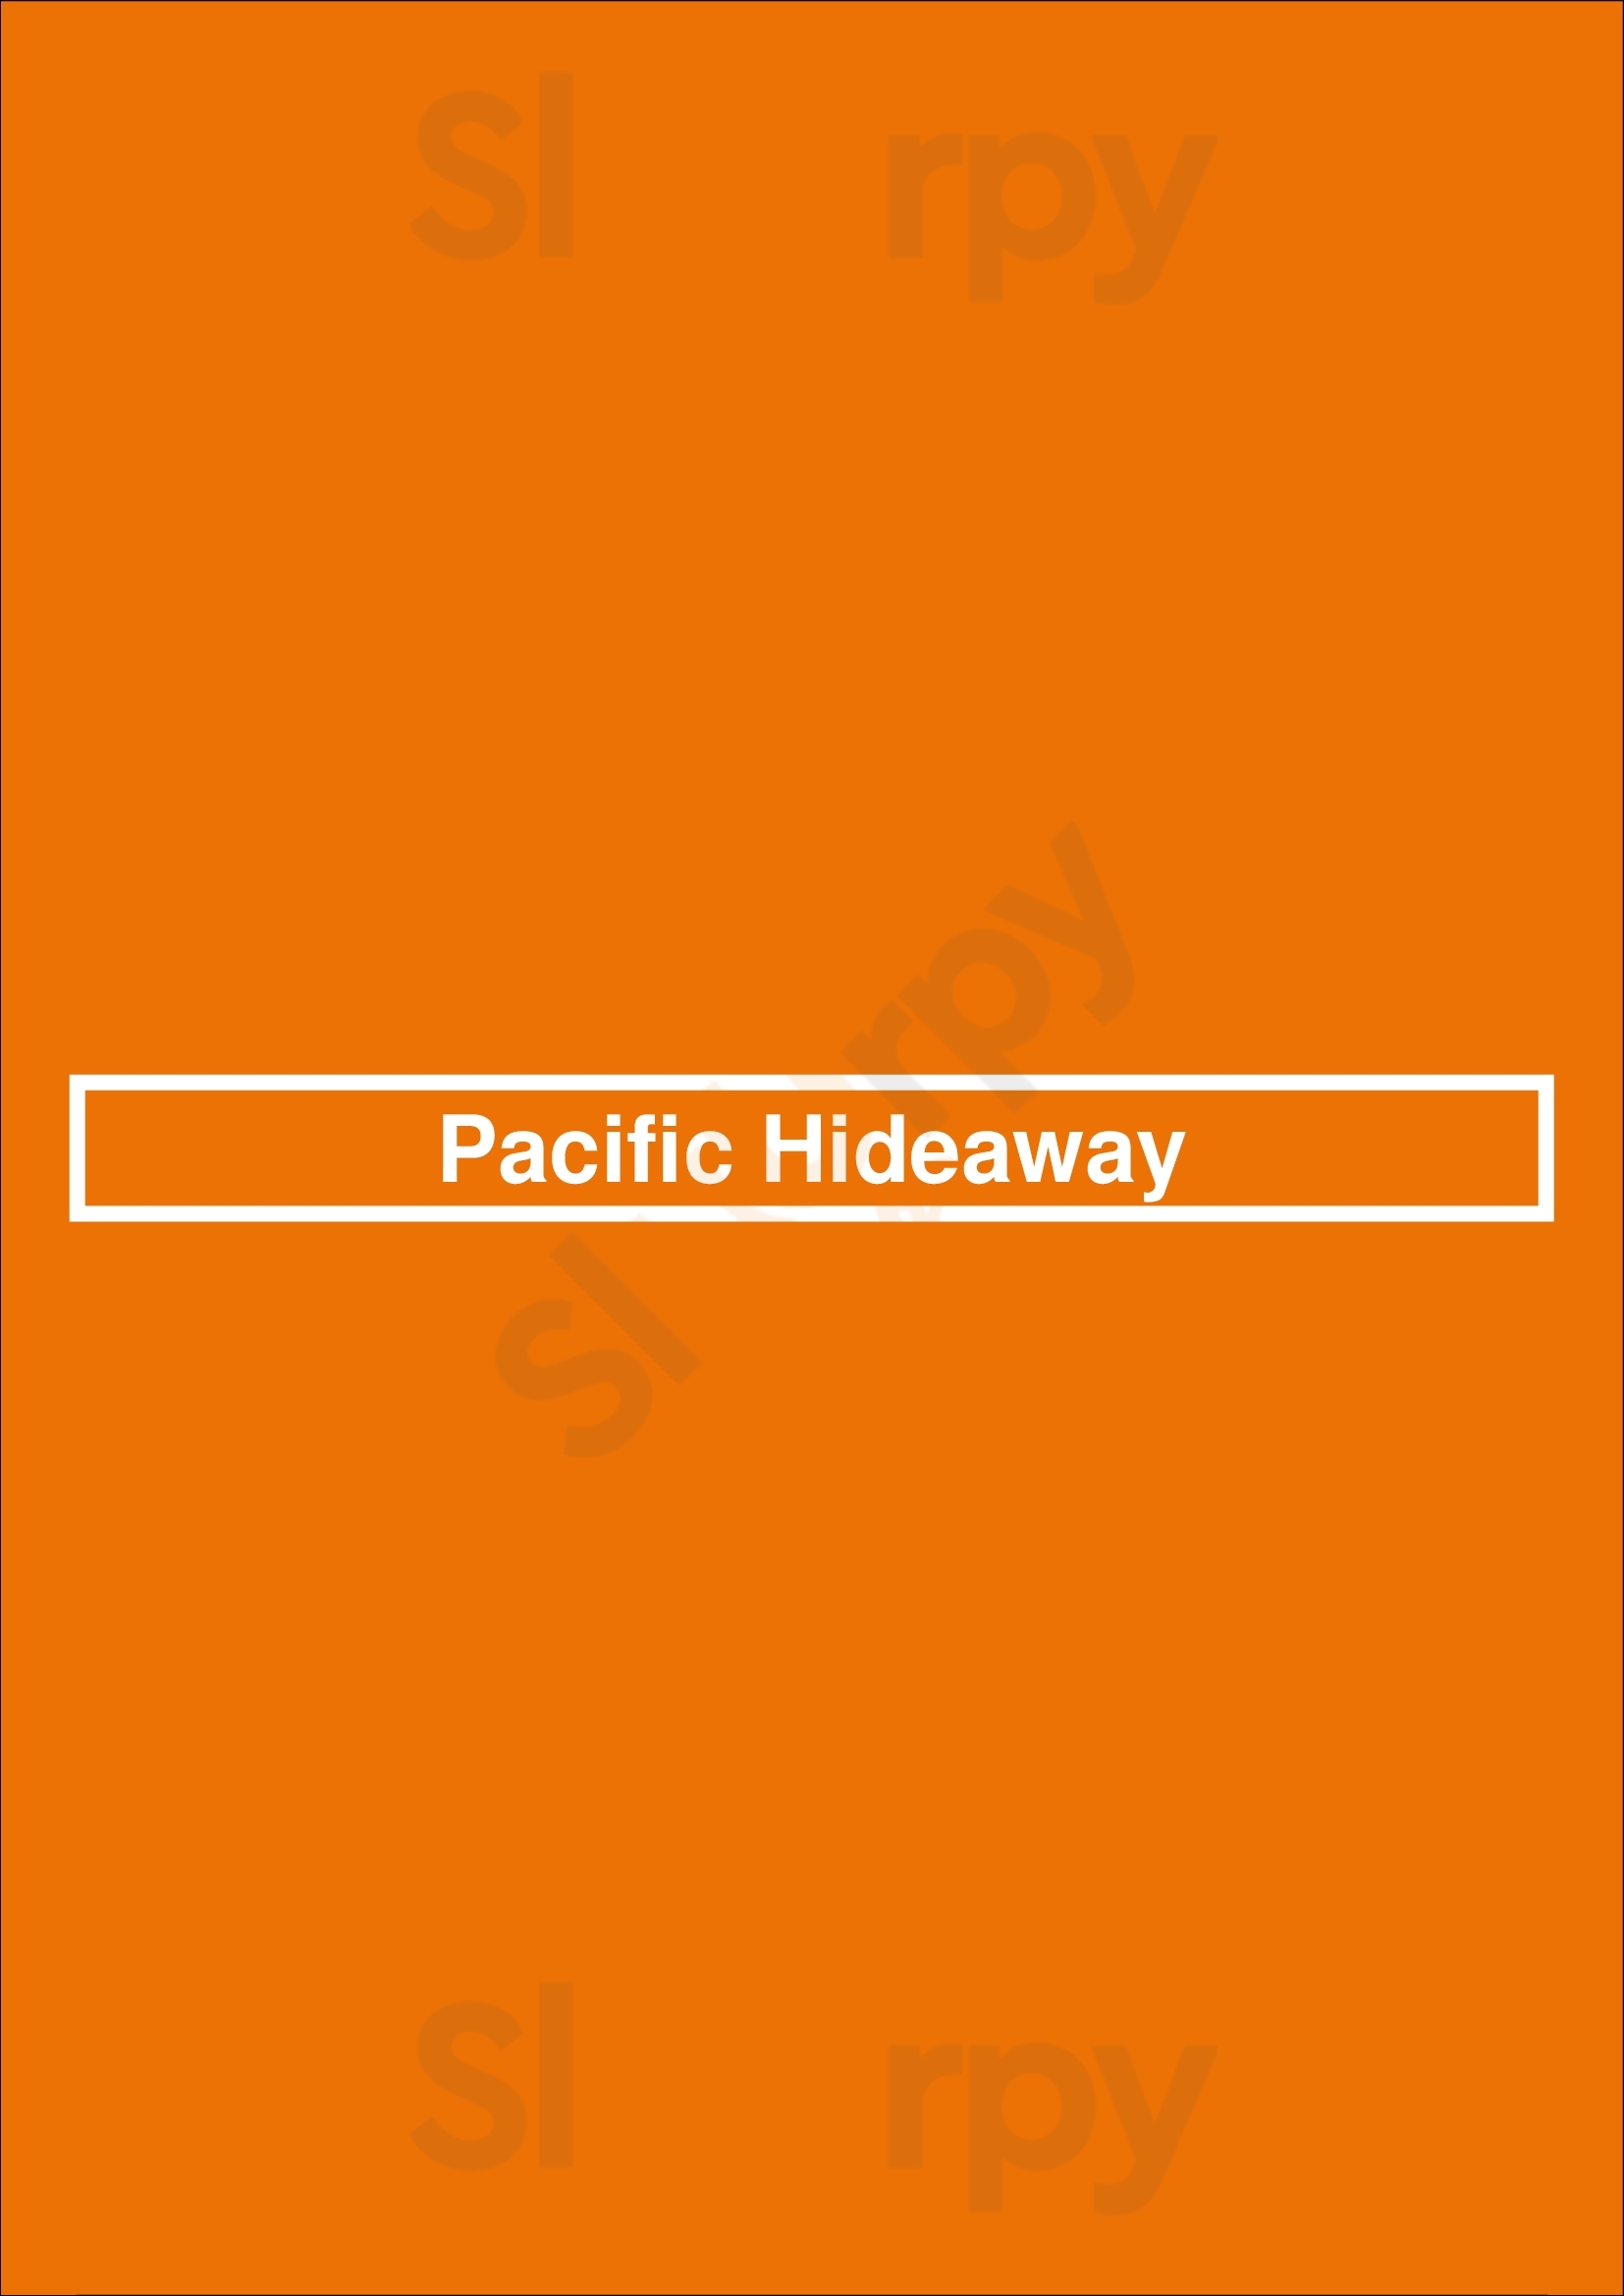 Pacific Hideaway Huntington Beach Menu - 1